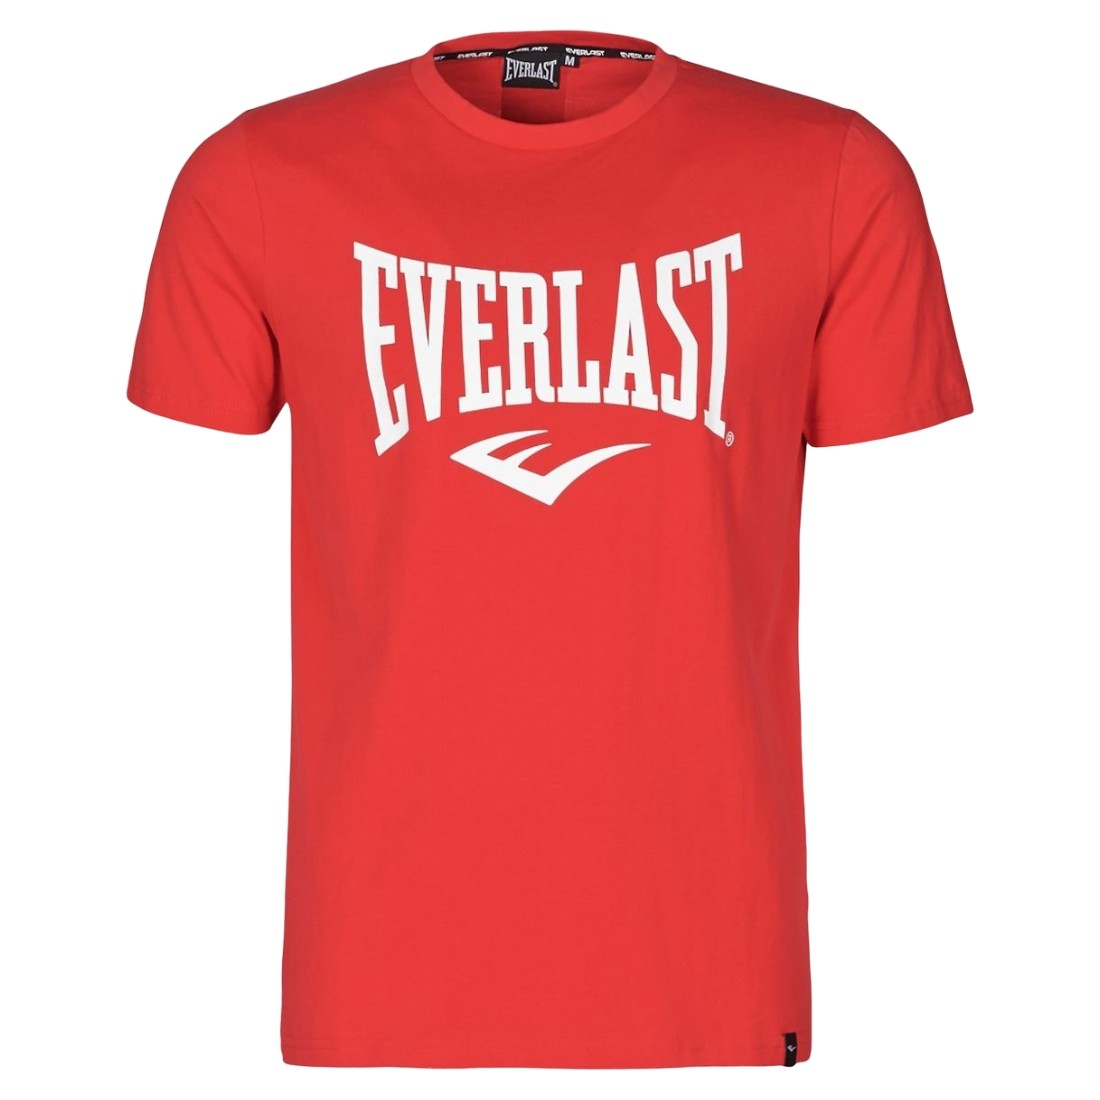 Everlast - 